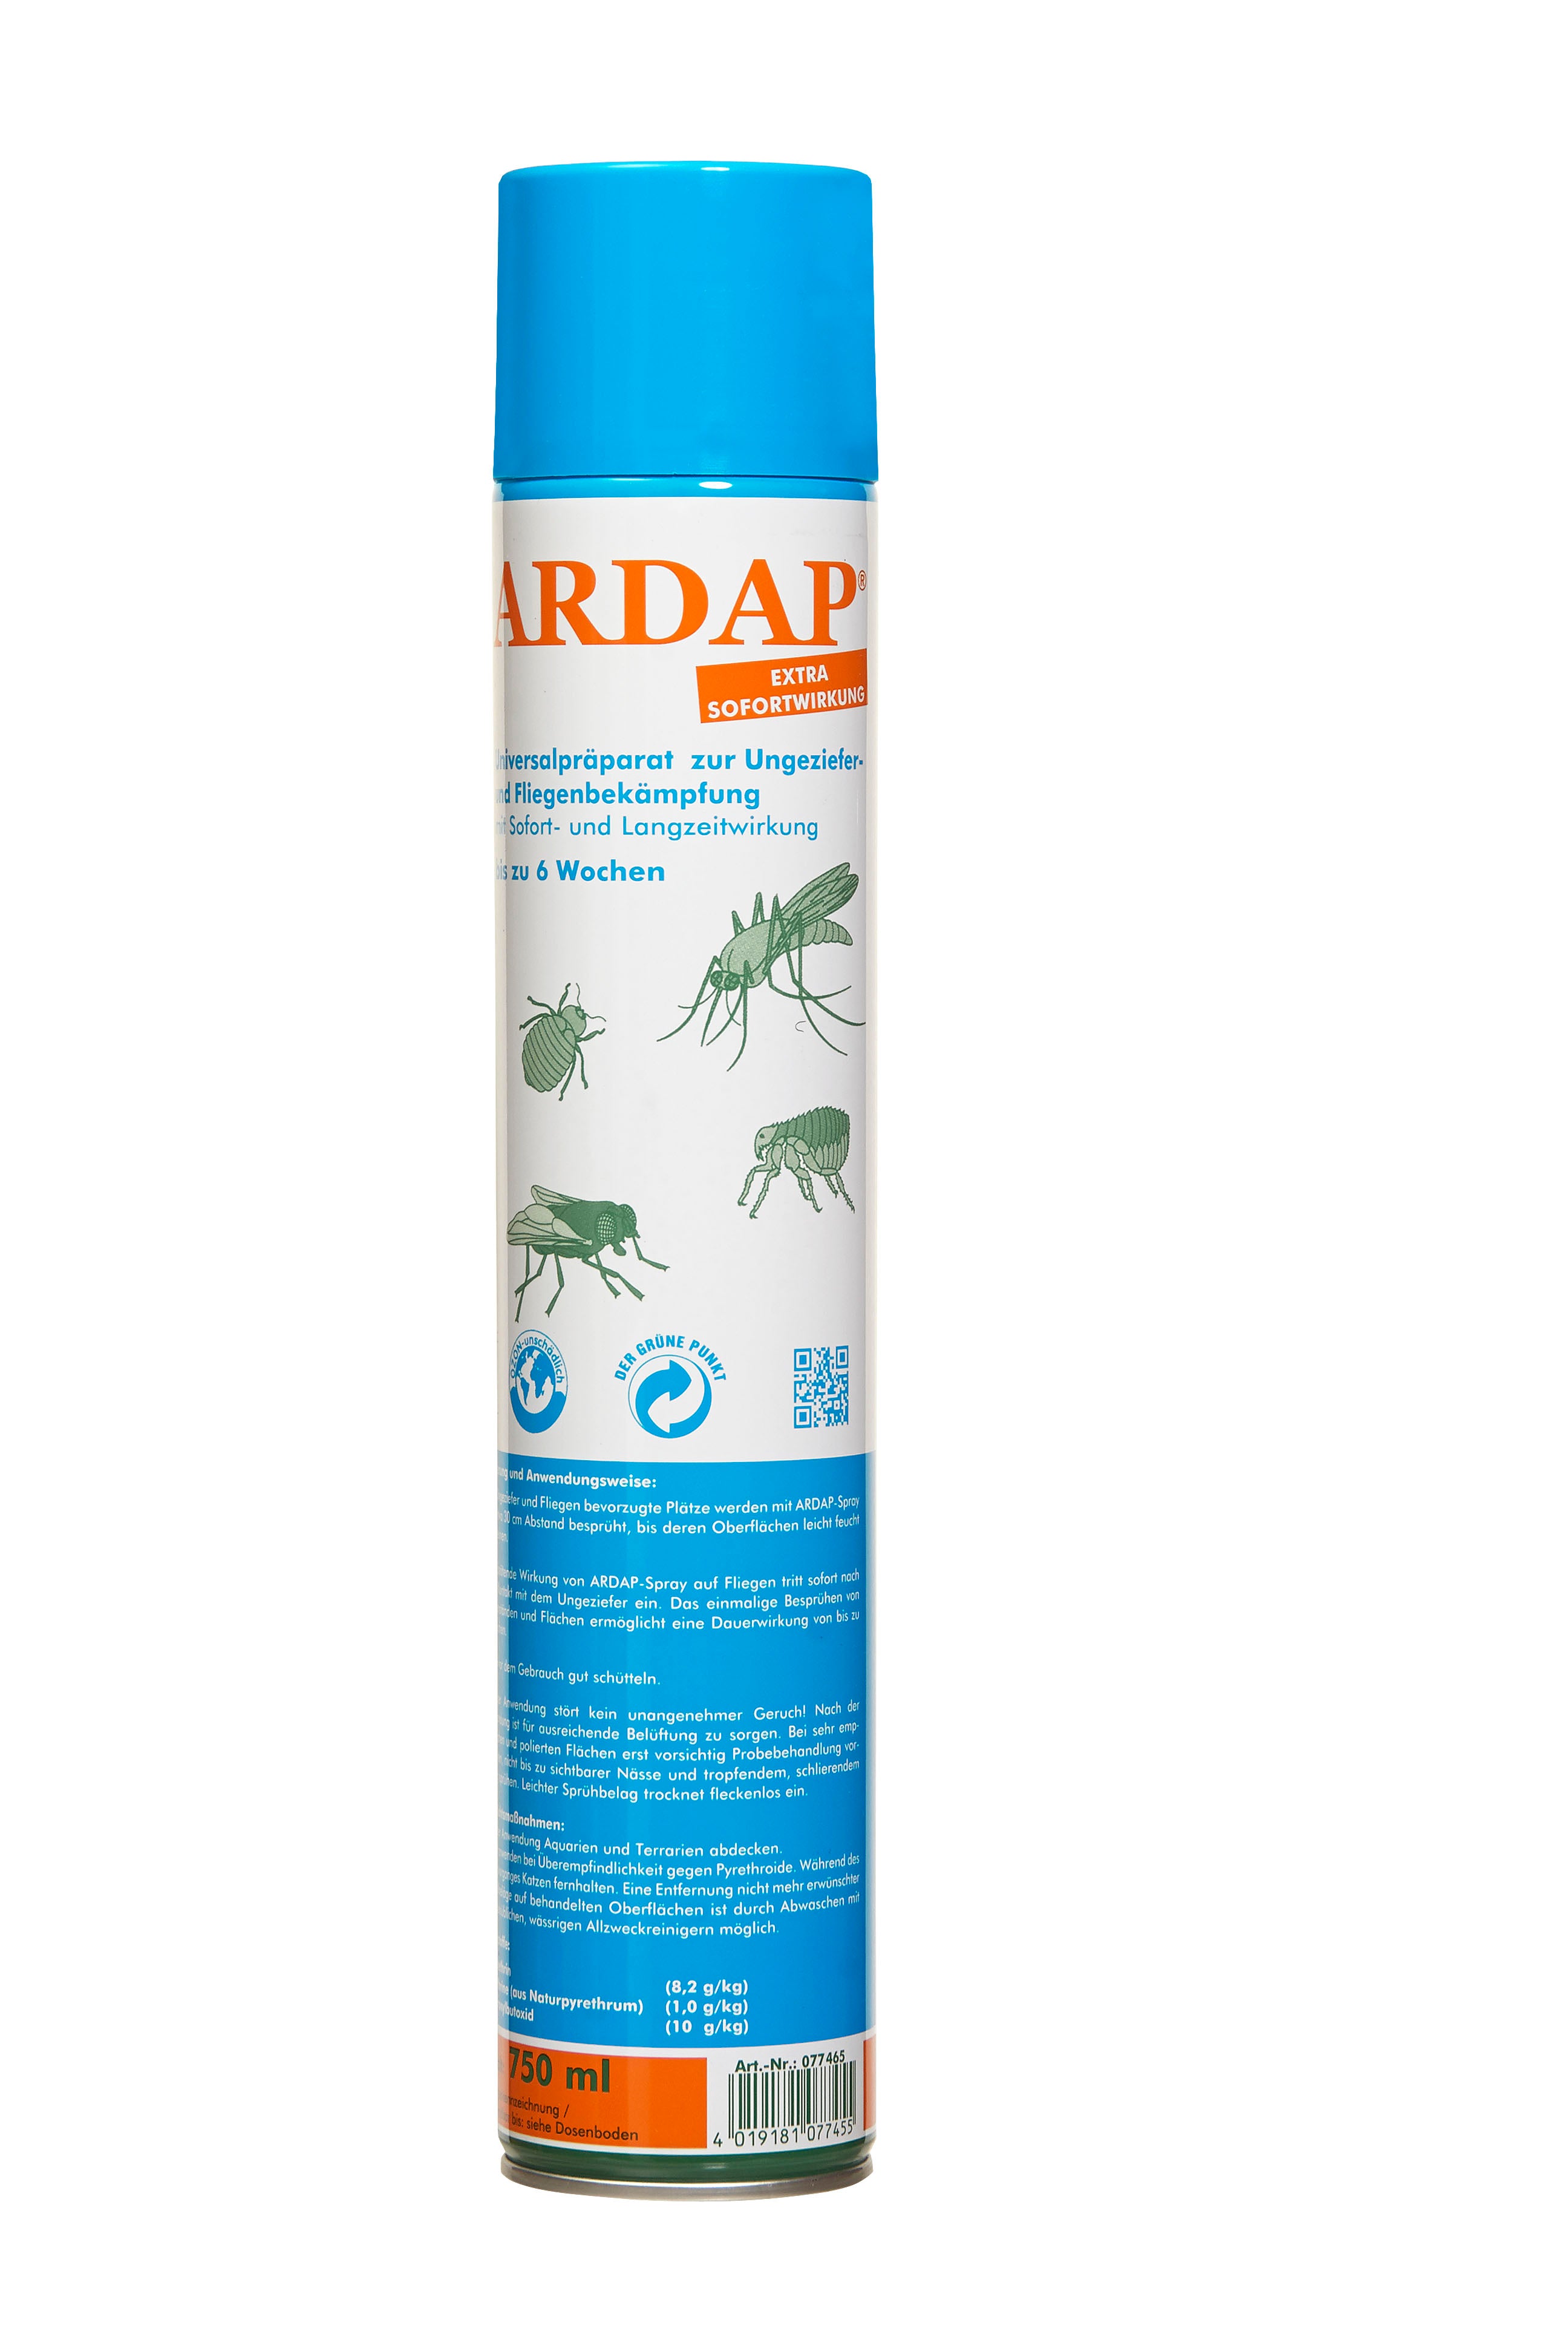 Ardap Spray against Vermin (750ml)